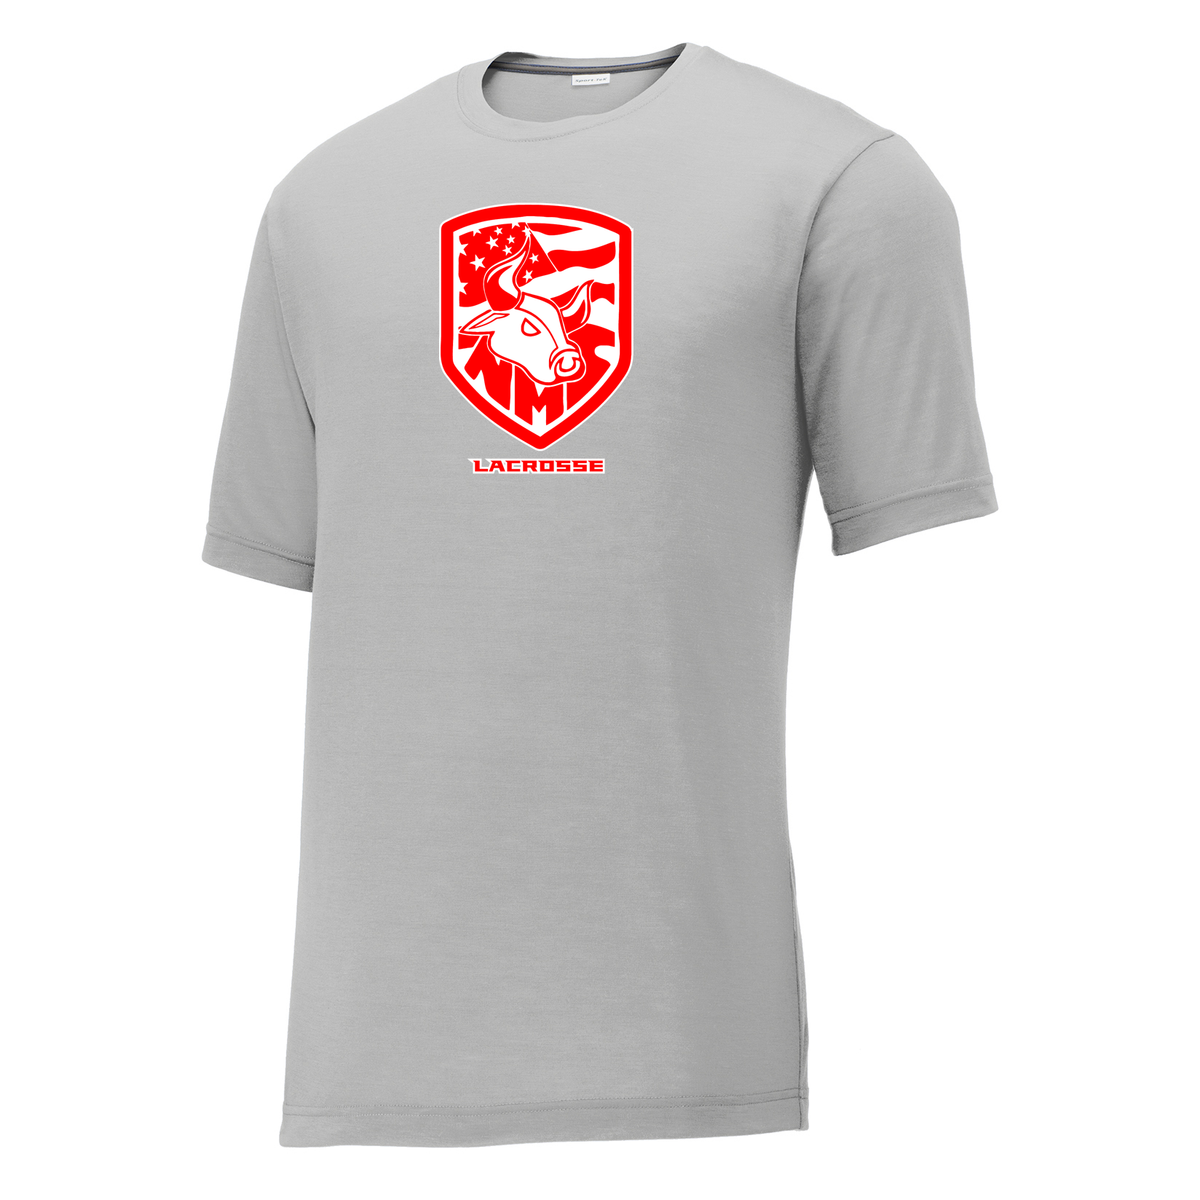 Nesaquake Lacrosse  CottonTouch Performance T-Shirt